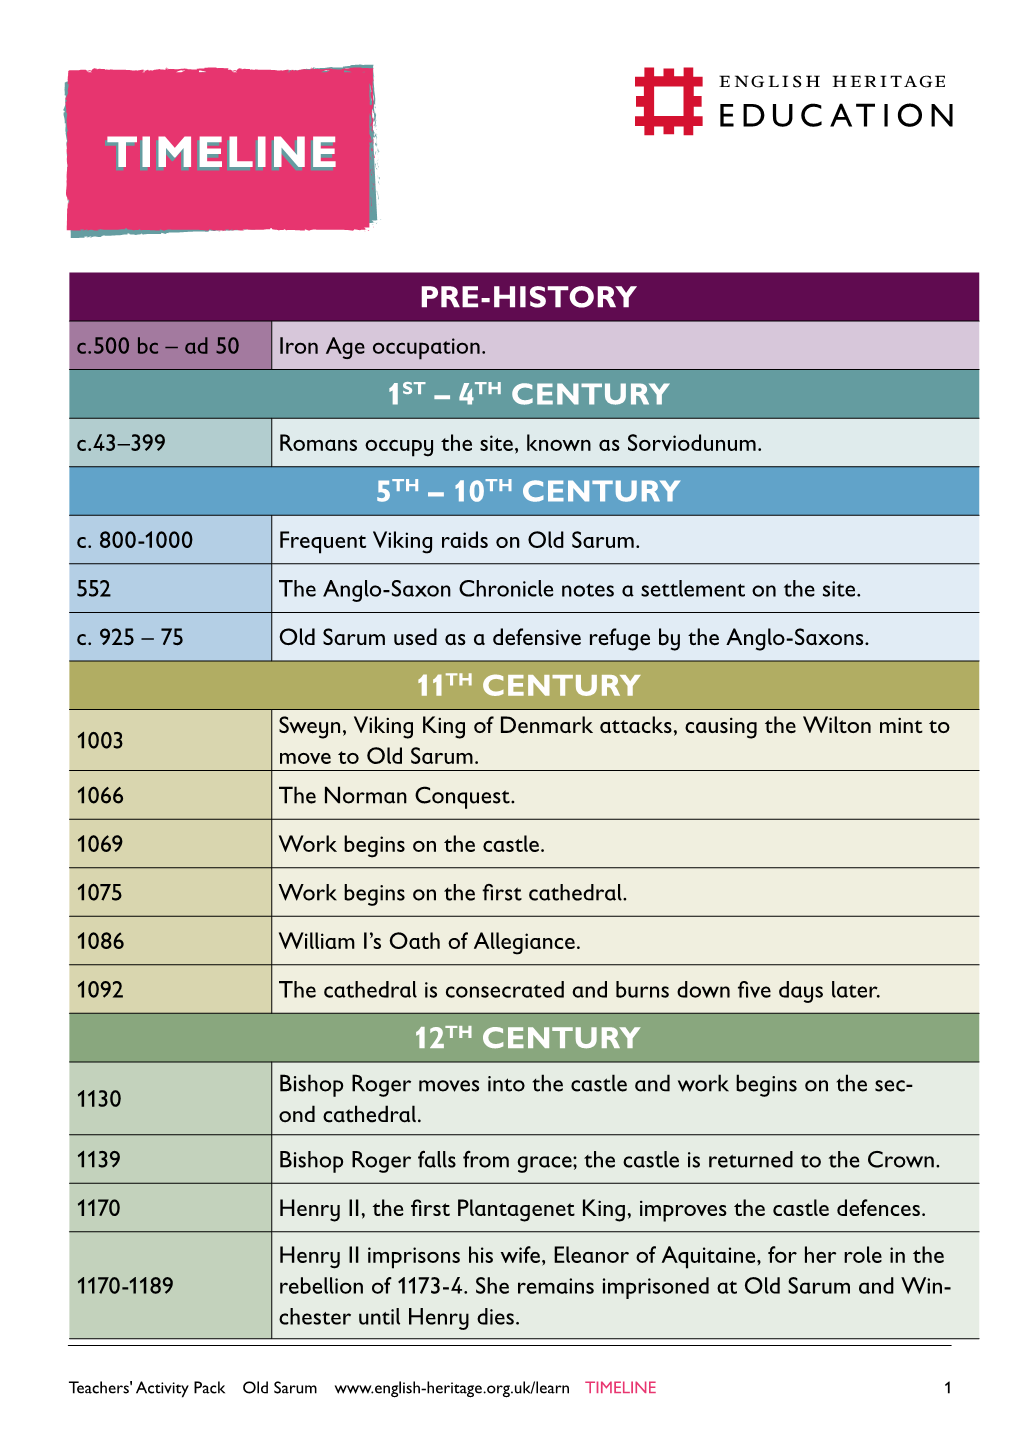 Old Sarum Timeline